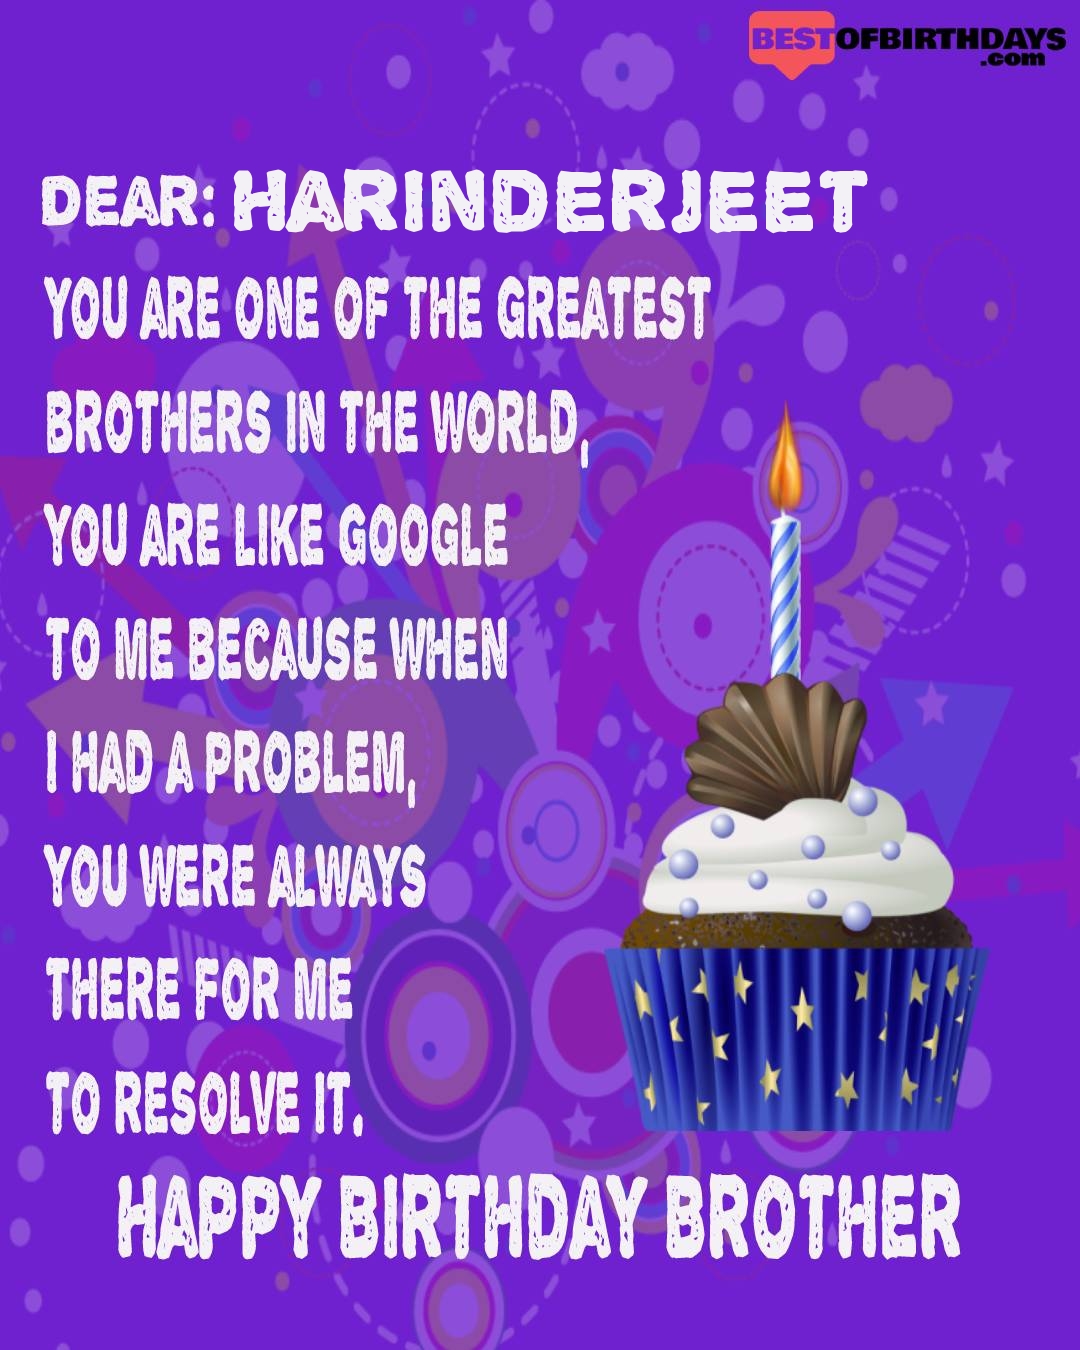 Happy birthday harinderjeet bhai brother bro